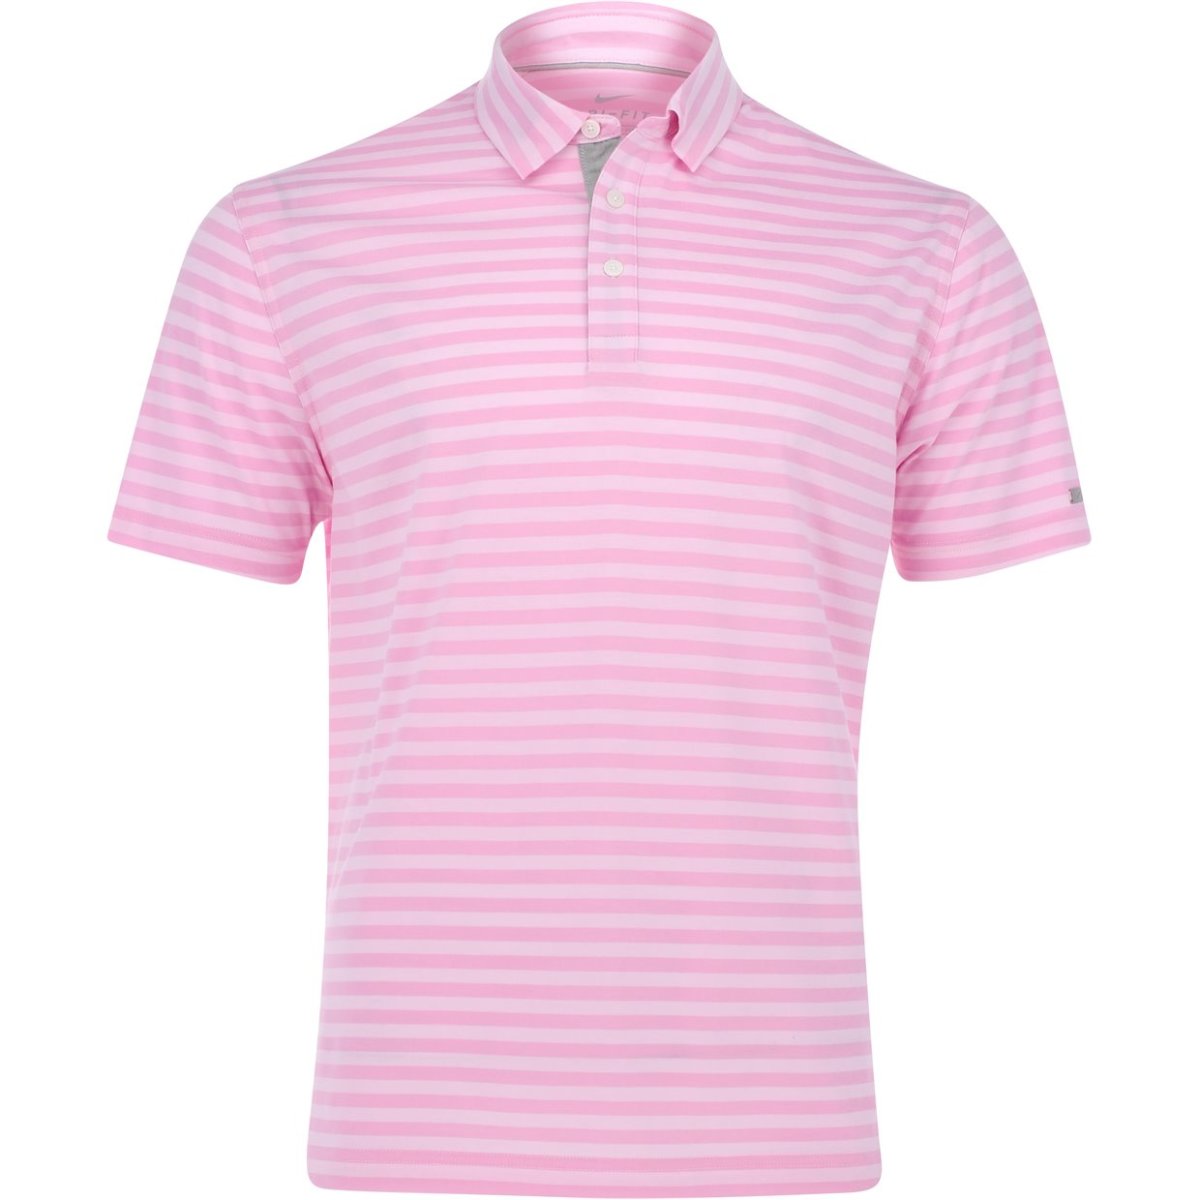 Shop the latest Nike golf apparel - like Nike golf polo shirts - on Morning Read's pro shop.